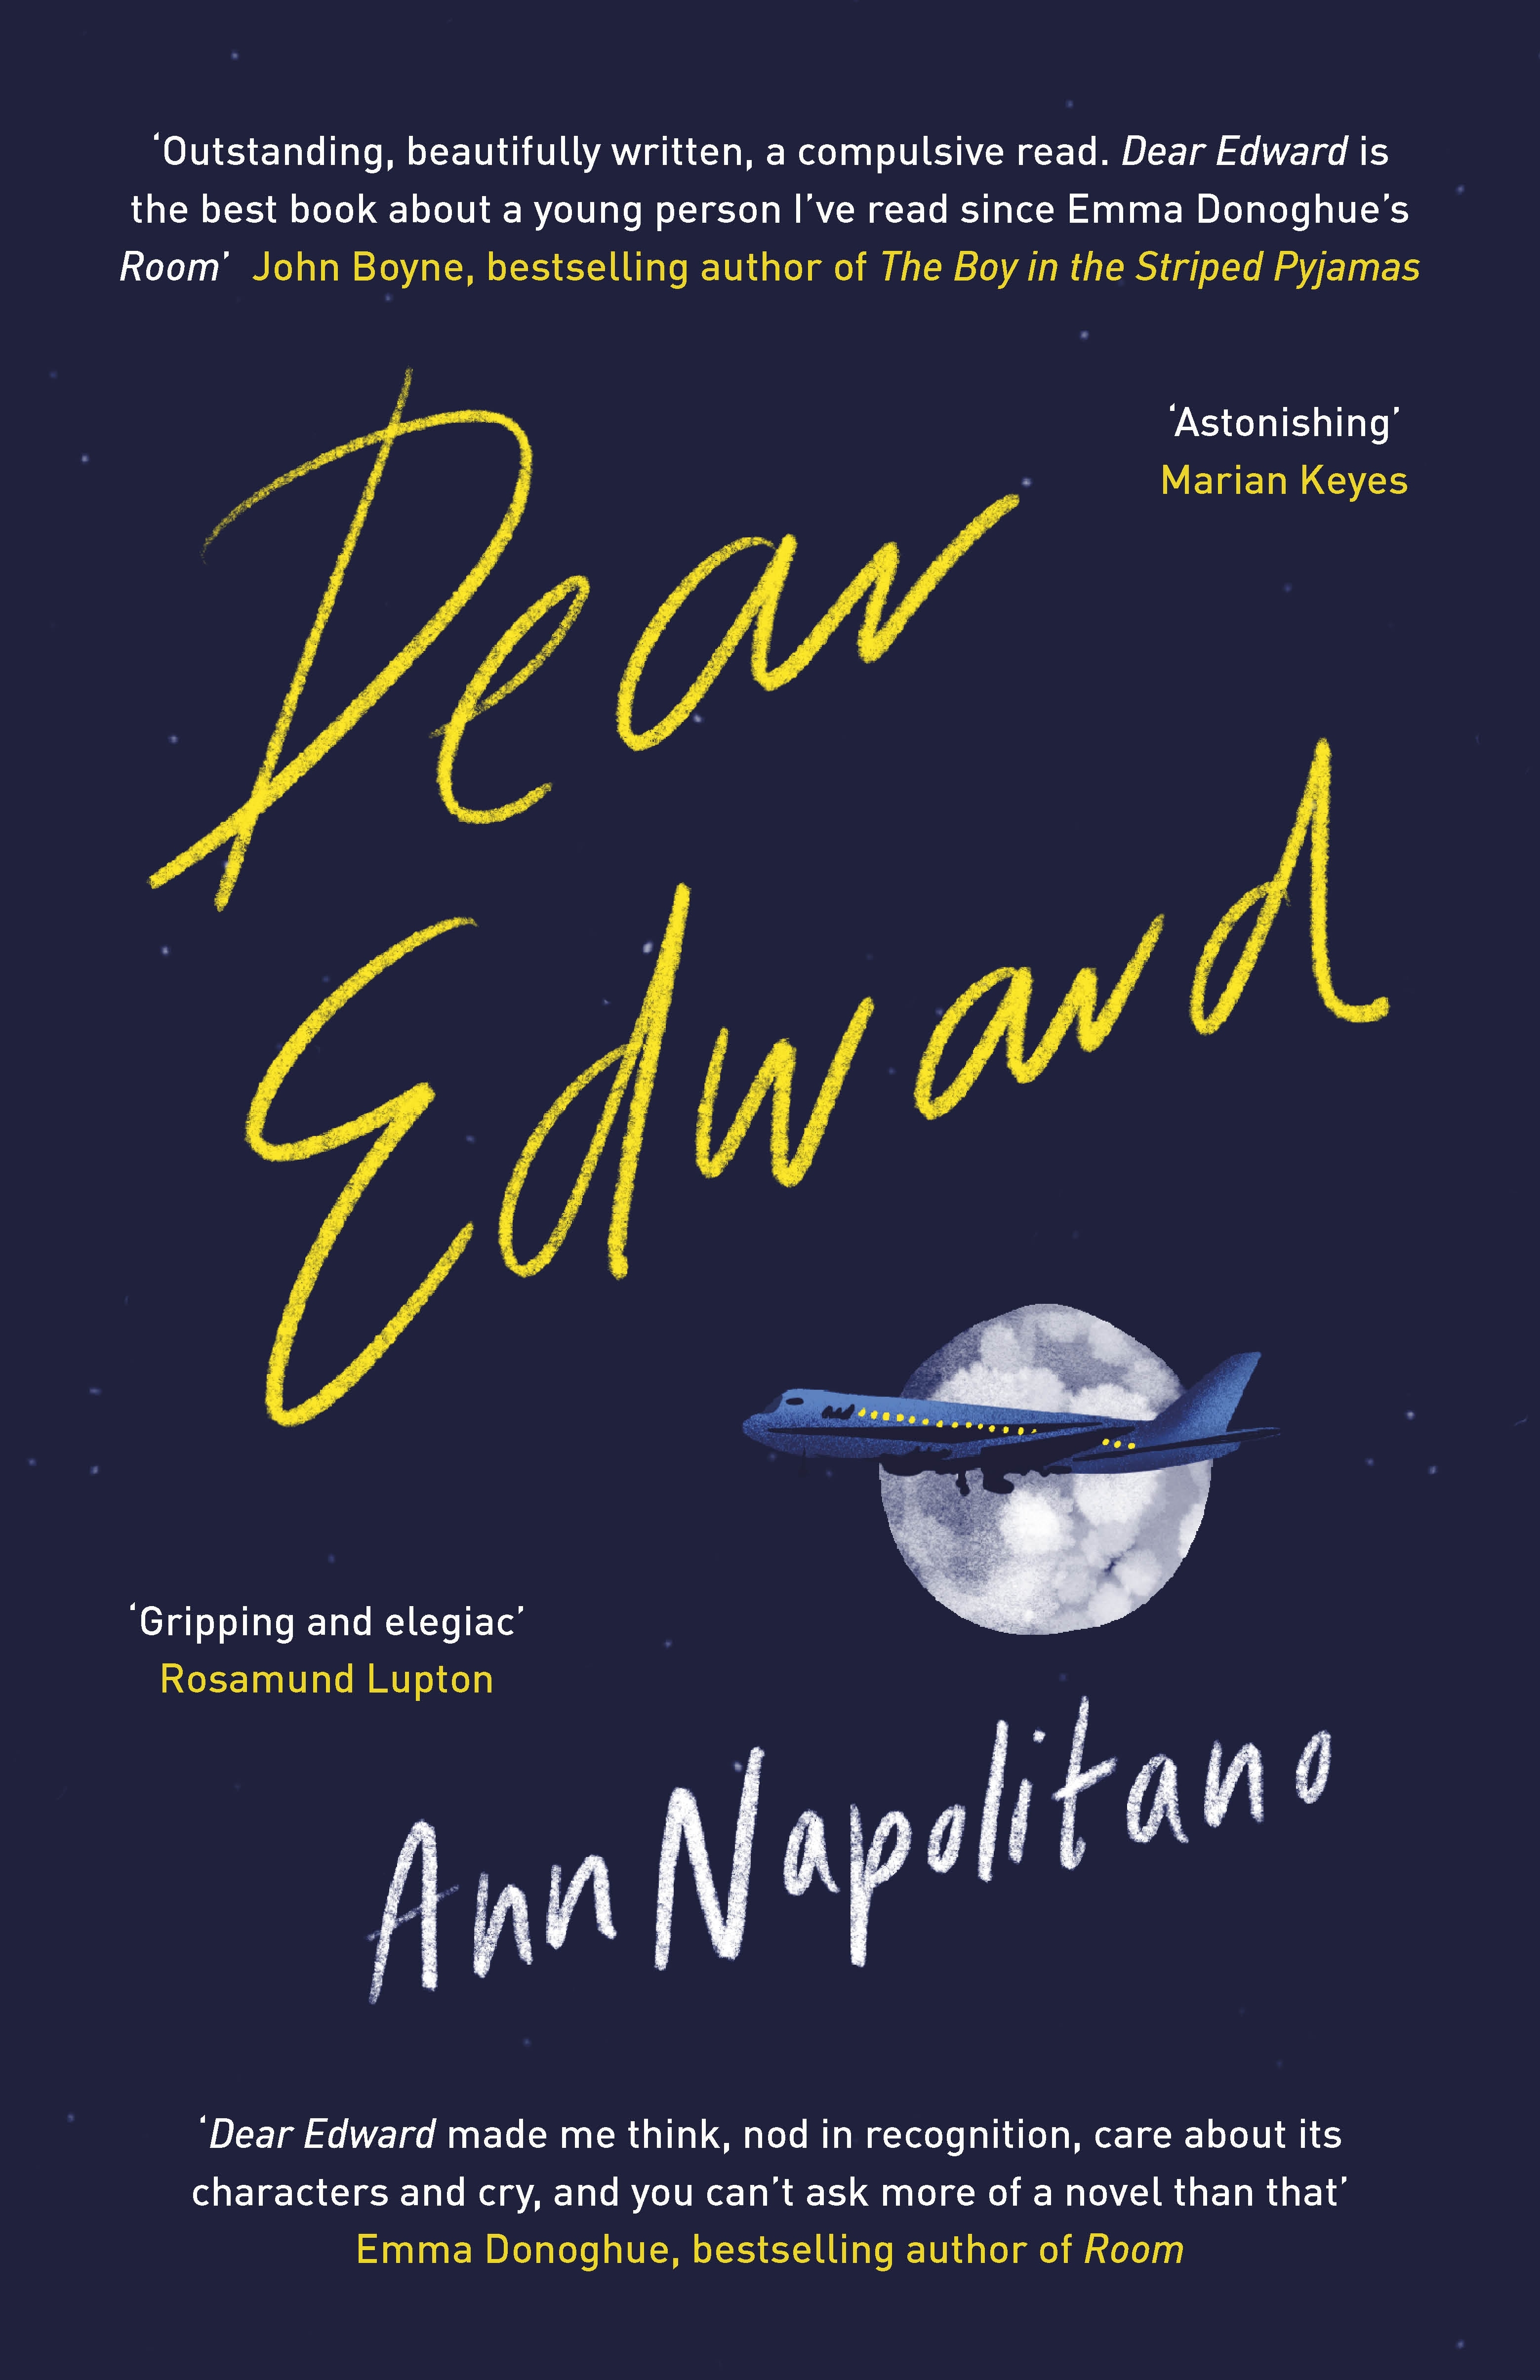 Book “Dear Edward” by Ann Napolitano — February 20, 2020